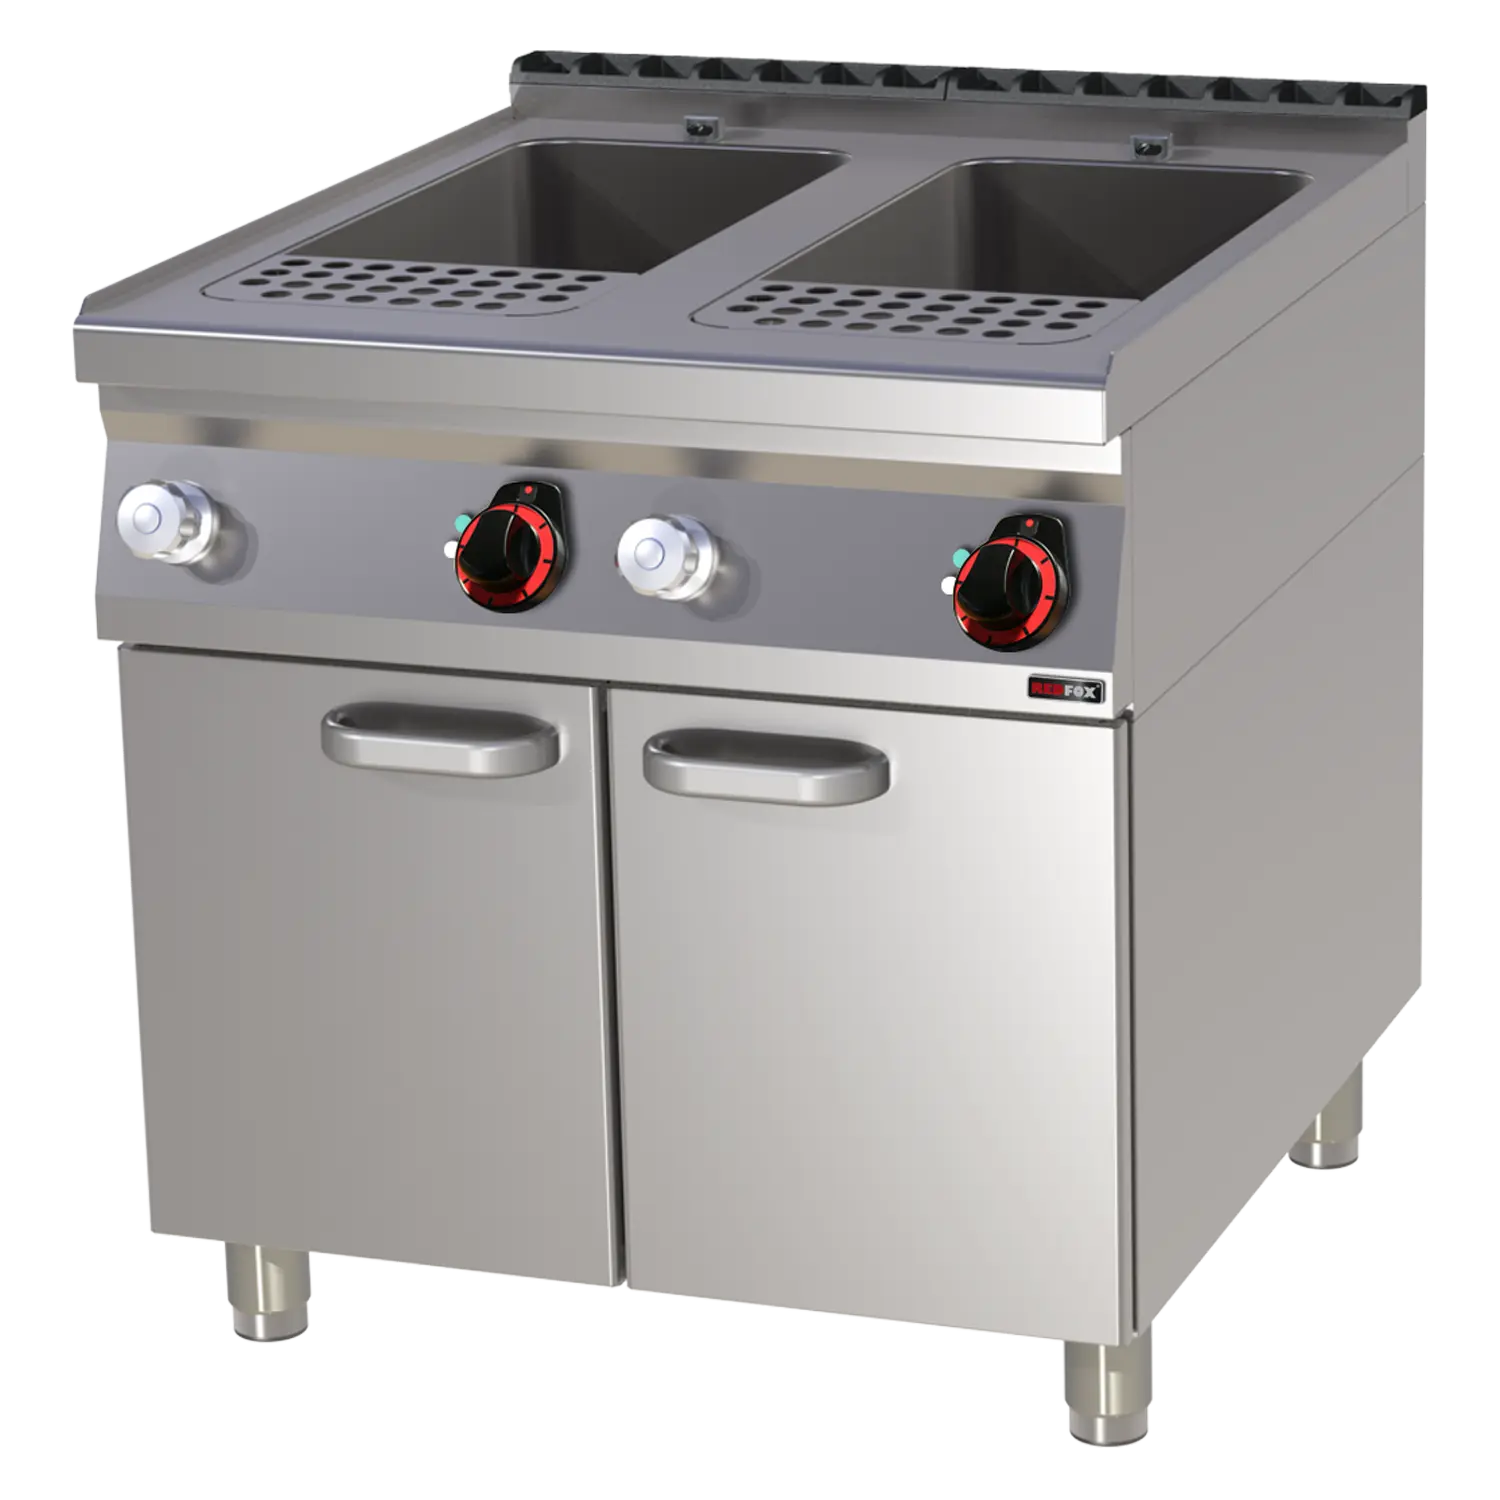 Pasta cooker electric 33 + 33 l with cabinet 400 V | REDFOX - VT 90/80 E